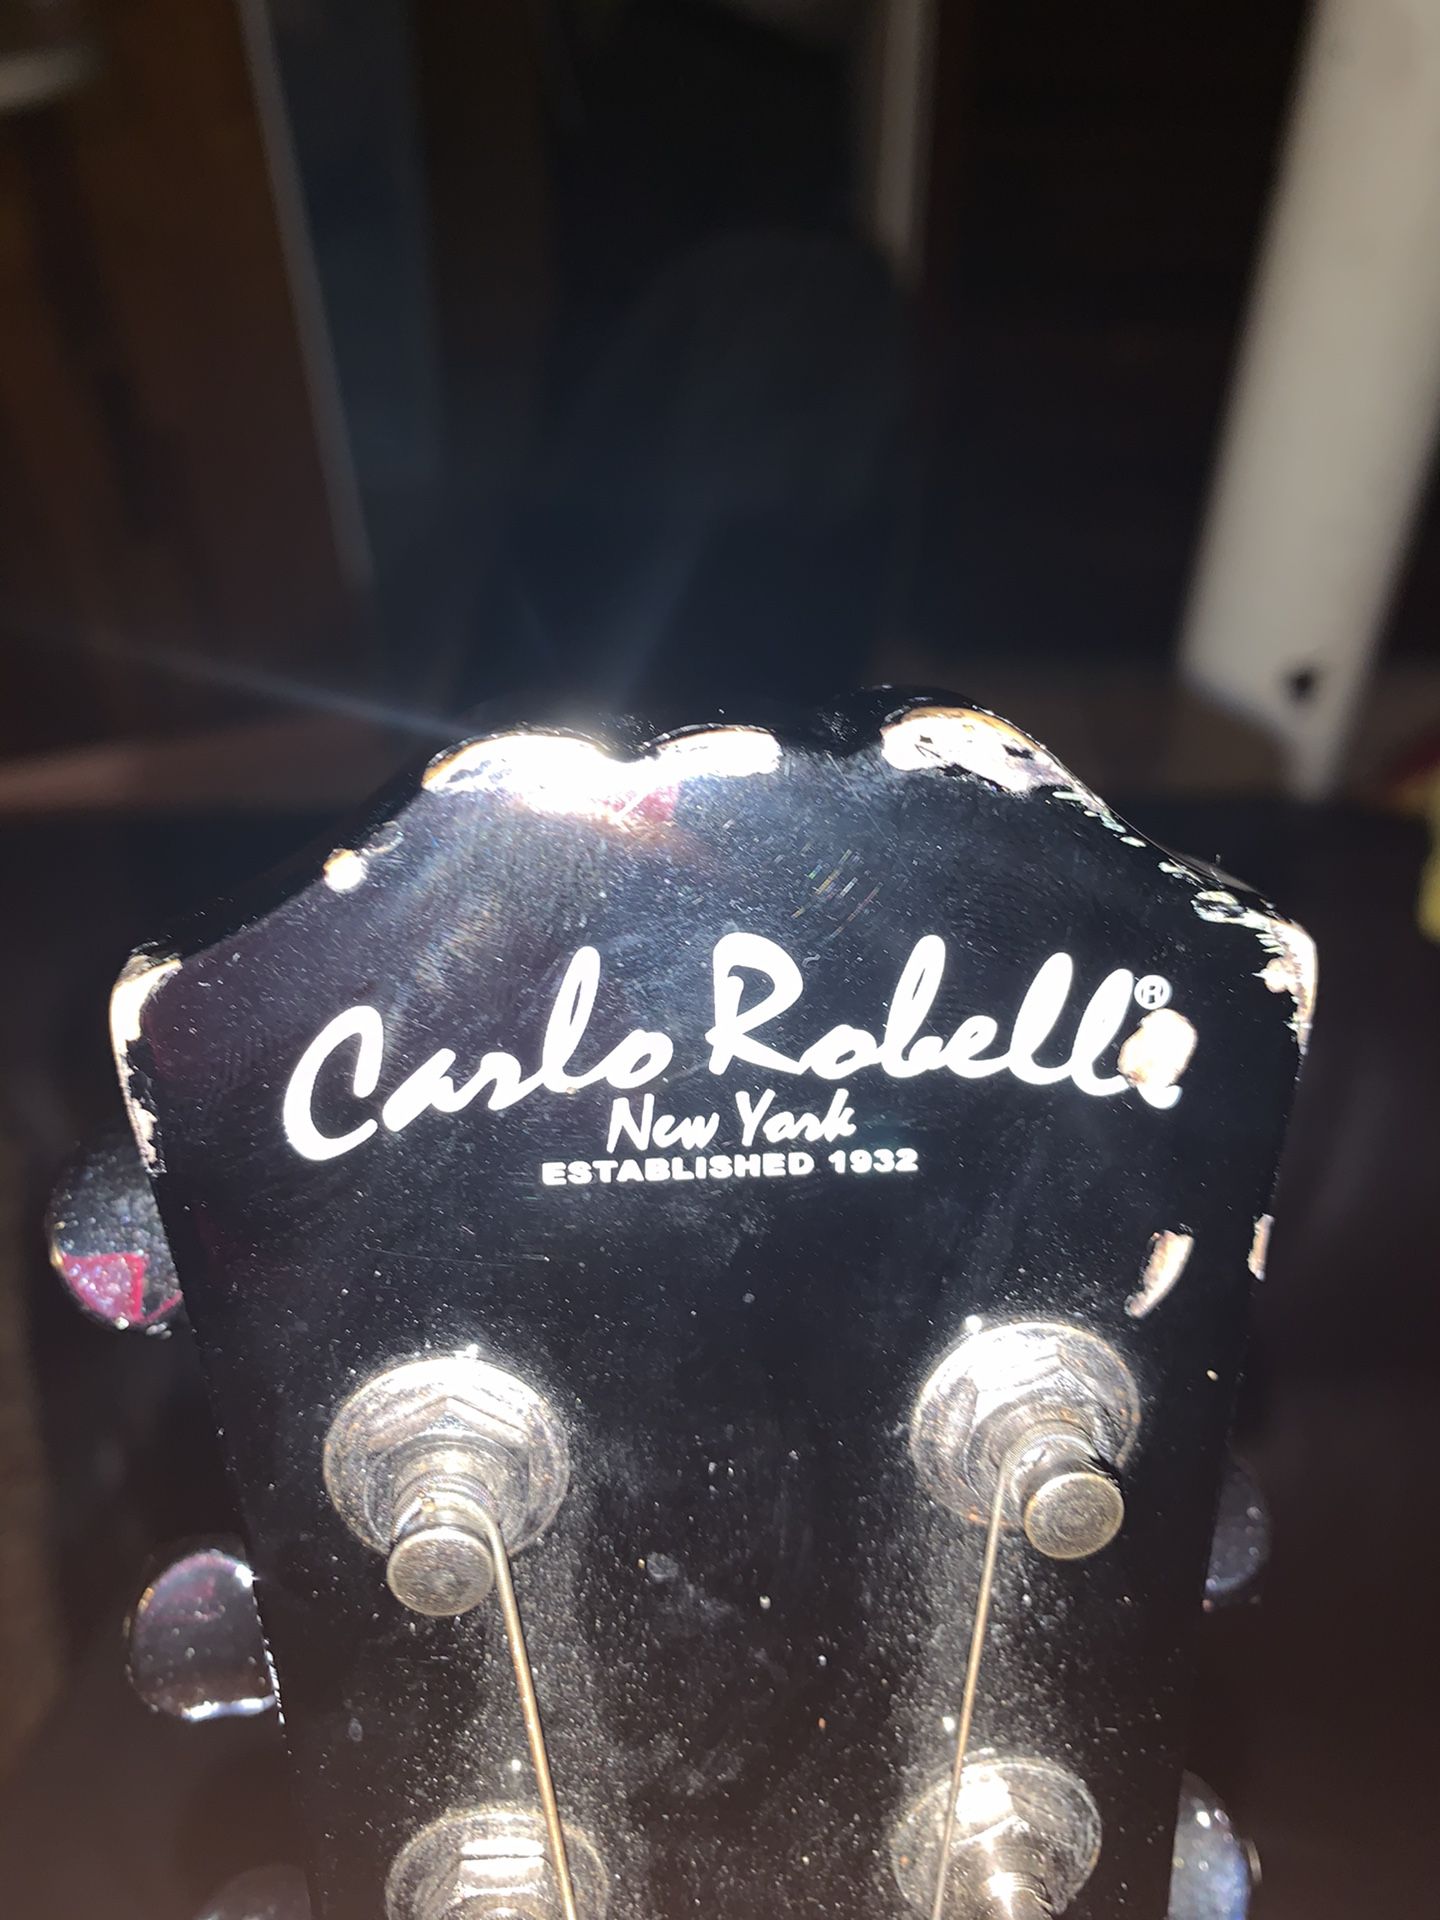 Carlo Robella Guitar for $50 comes with case